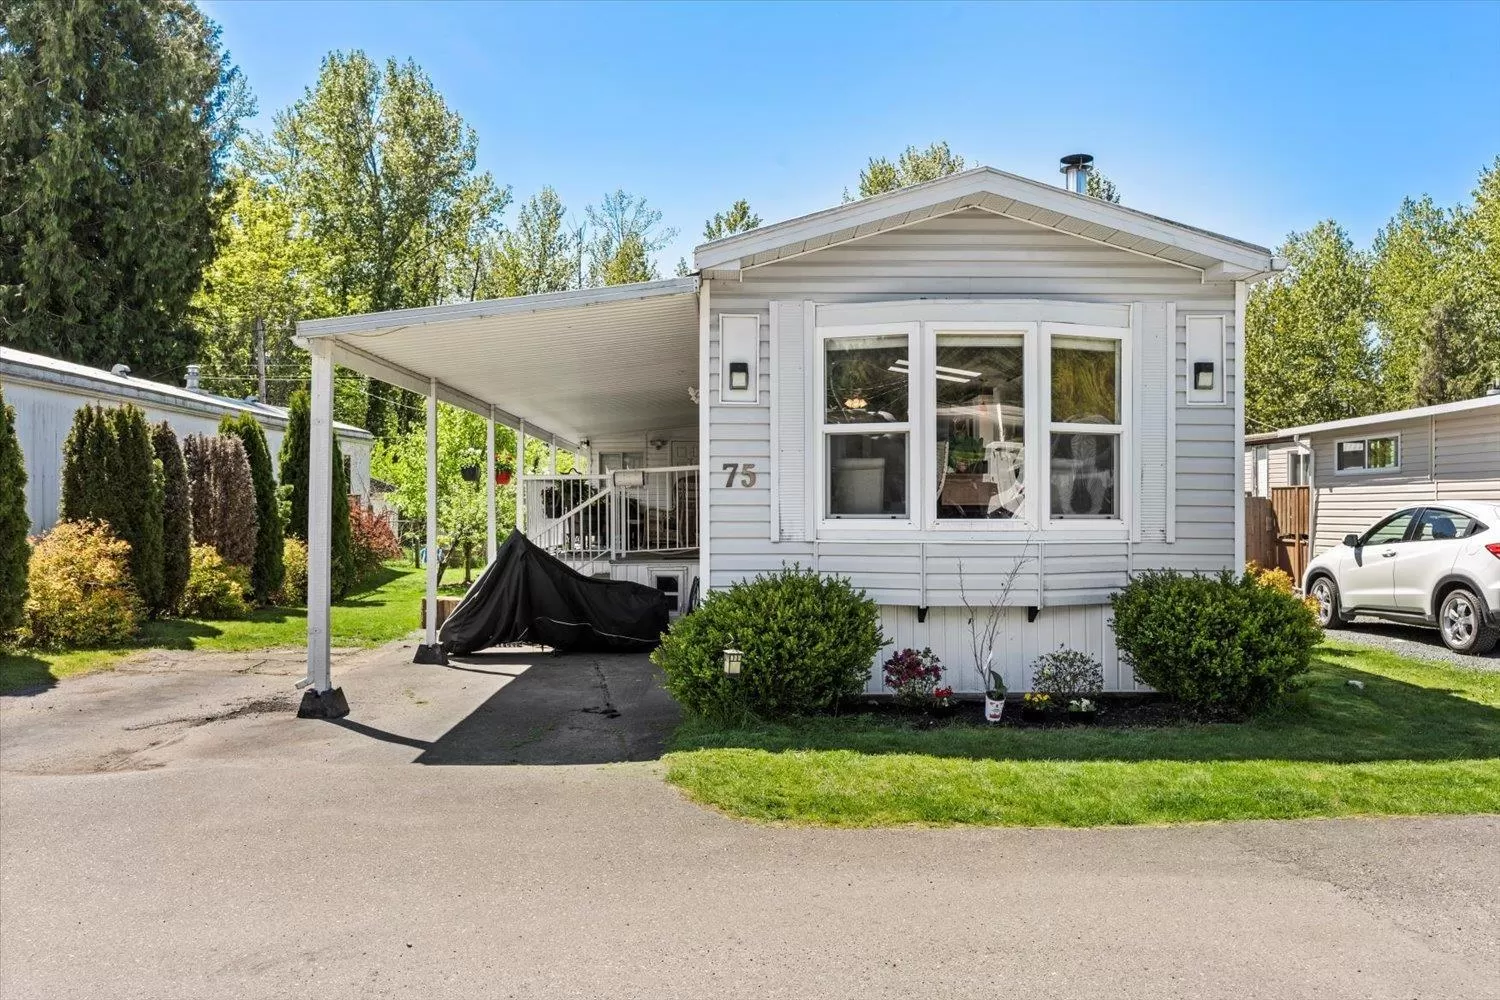 Manufactured Home for rent: 75 46484 Chilliwack Lake Road, Chilliwack, British Columbia V2R 3R9